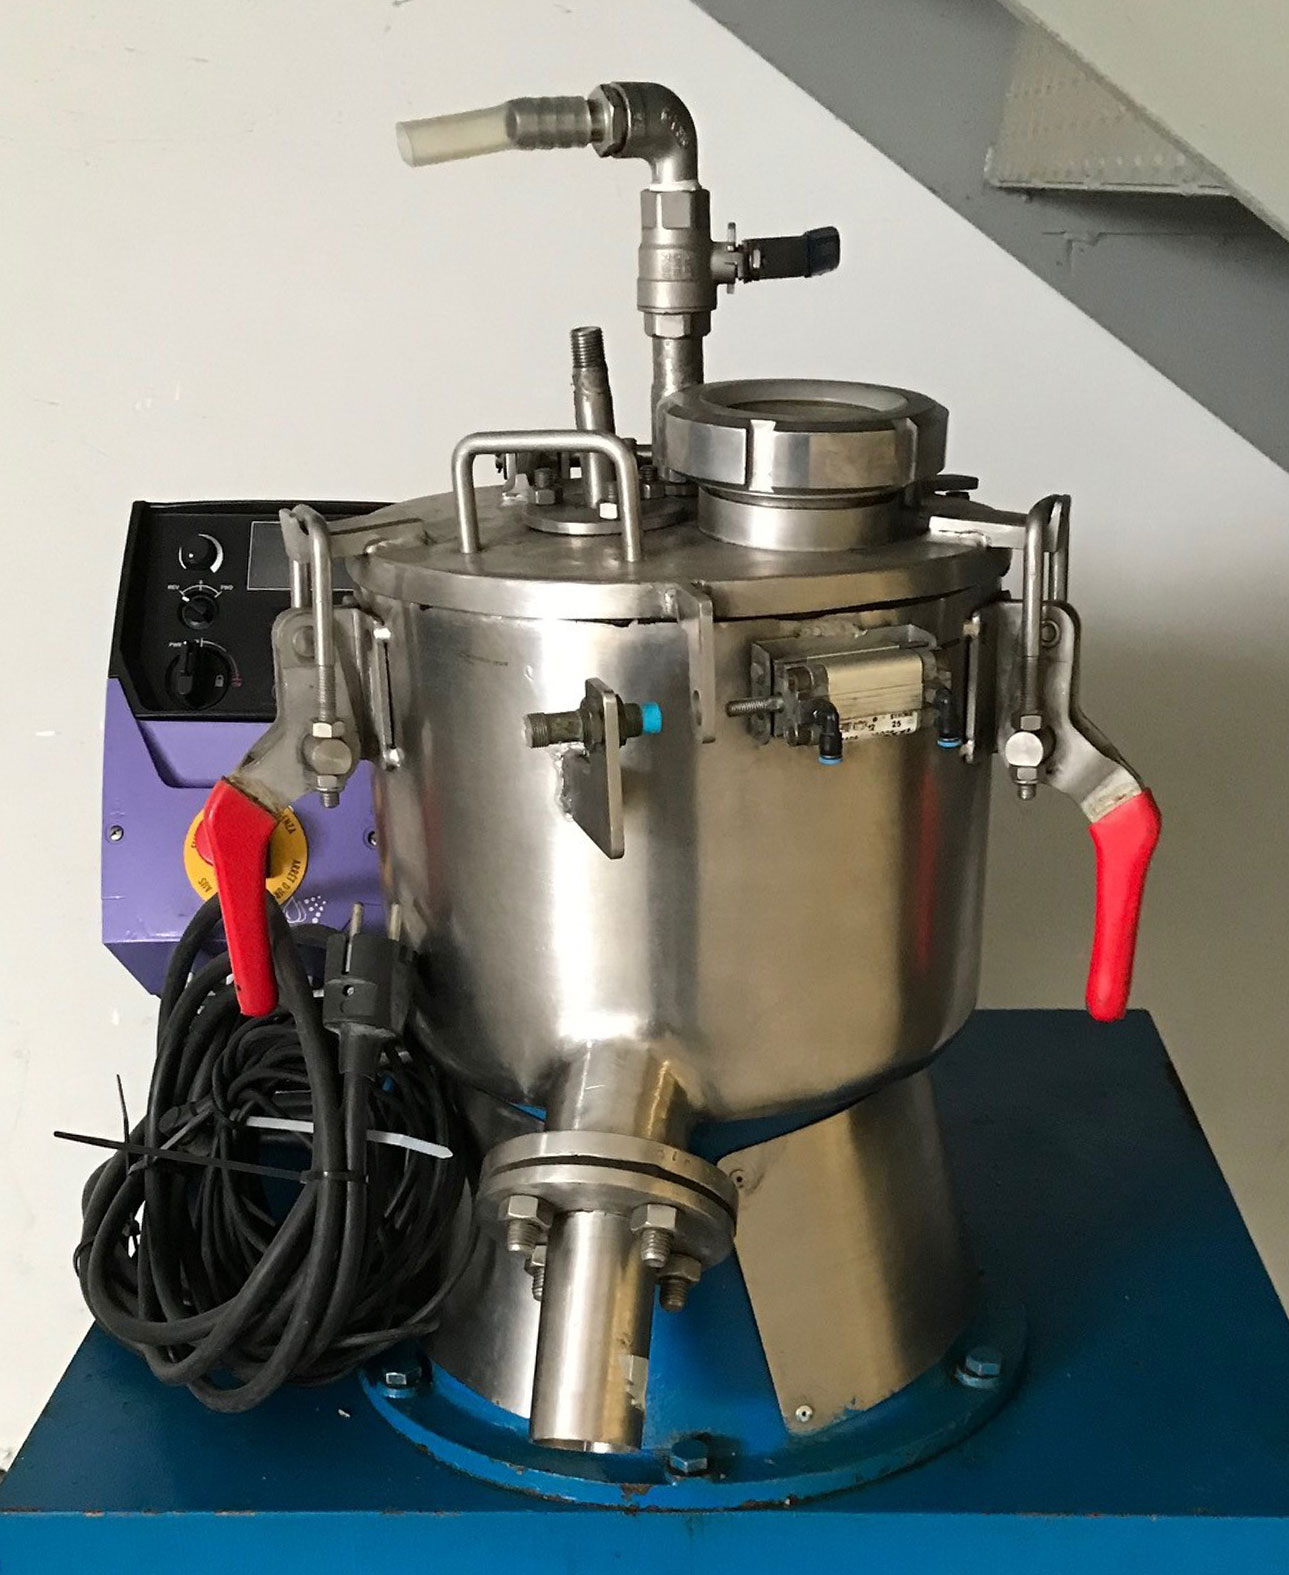 Fabricacion centrifugas RT 2 4 - CENTRIFUGA LABORATORIO RT-2 EN ACERO INOXIDABLE 1.4404 (316L)